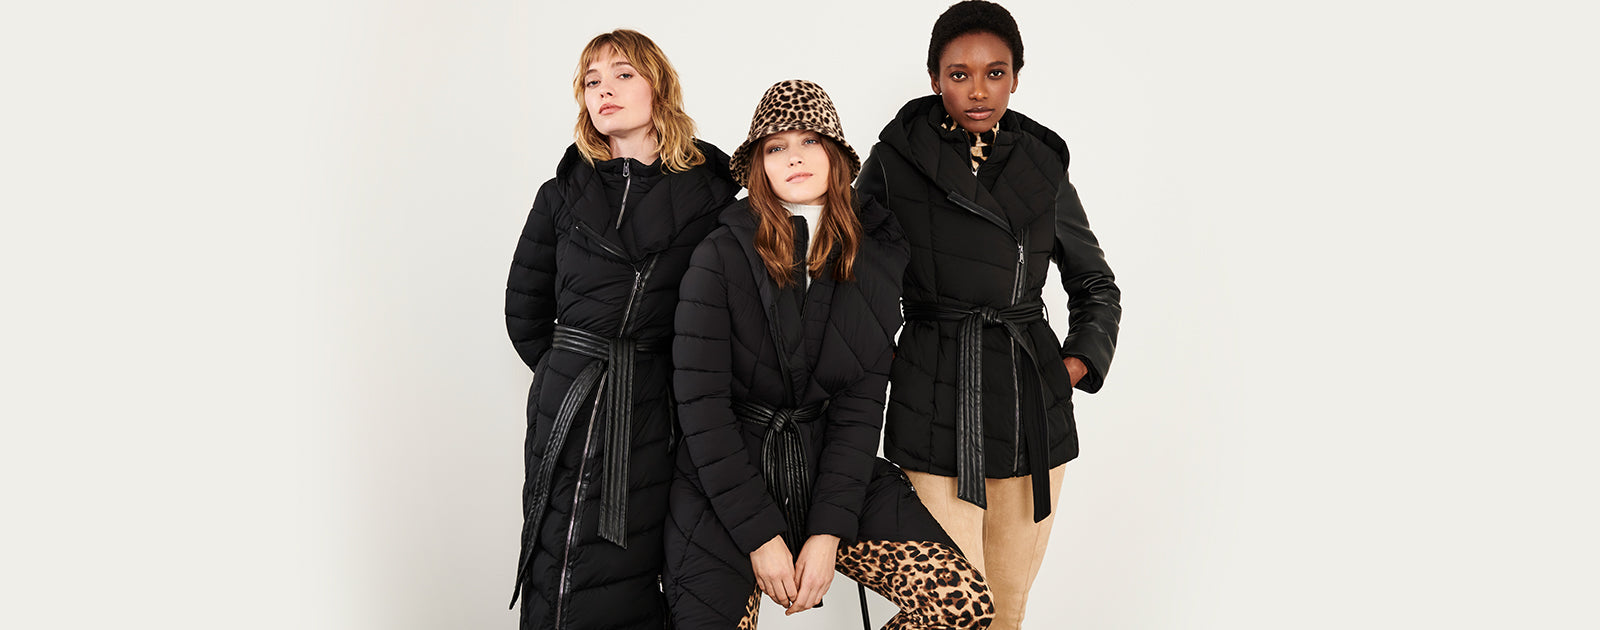 Women's Black Coats, Hooded Winter Coats & Jackets